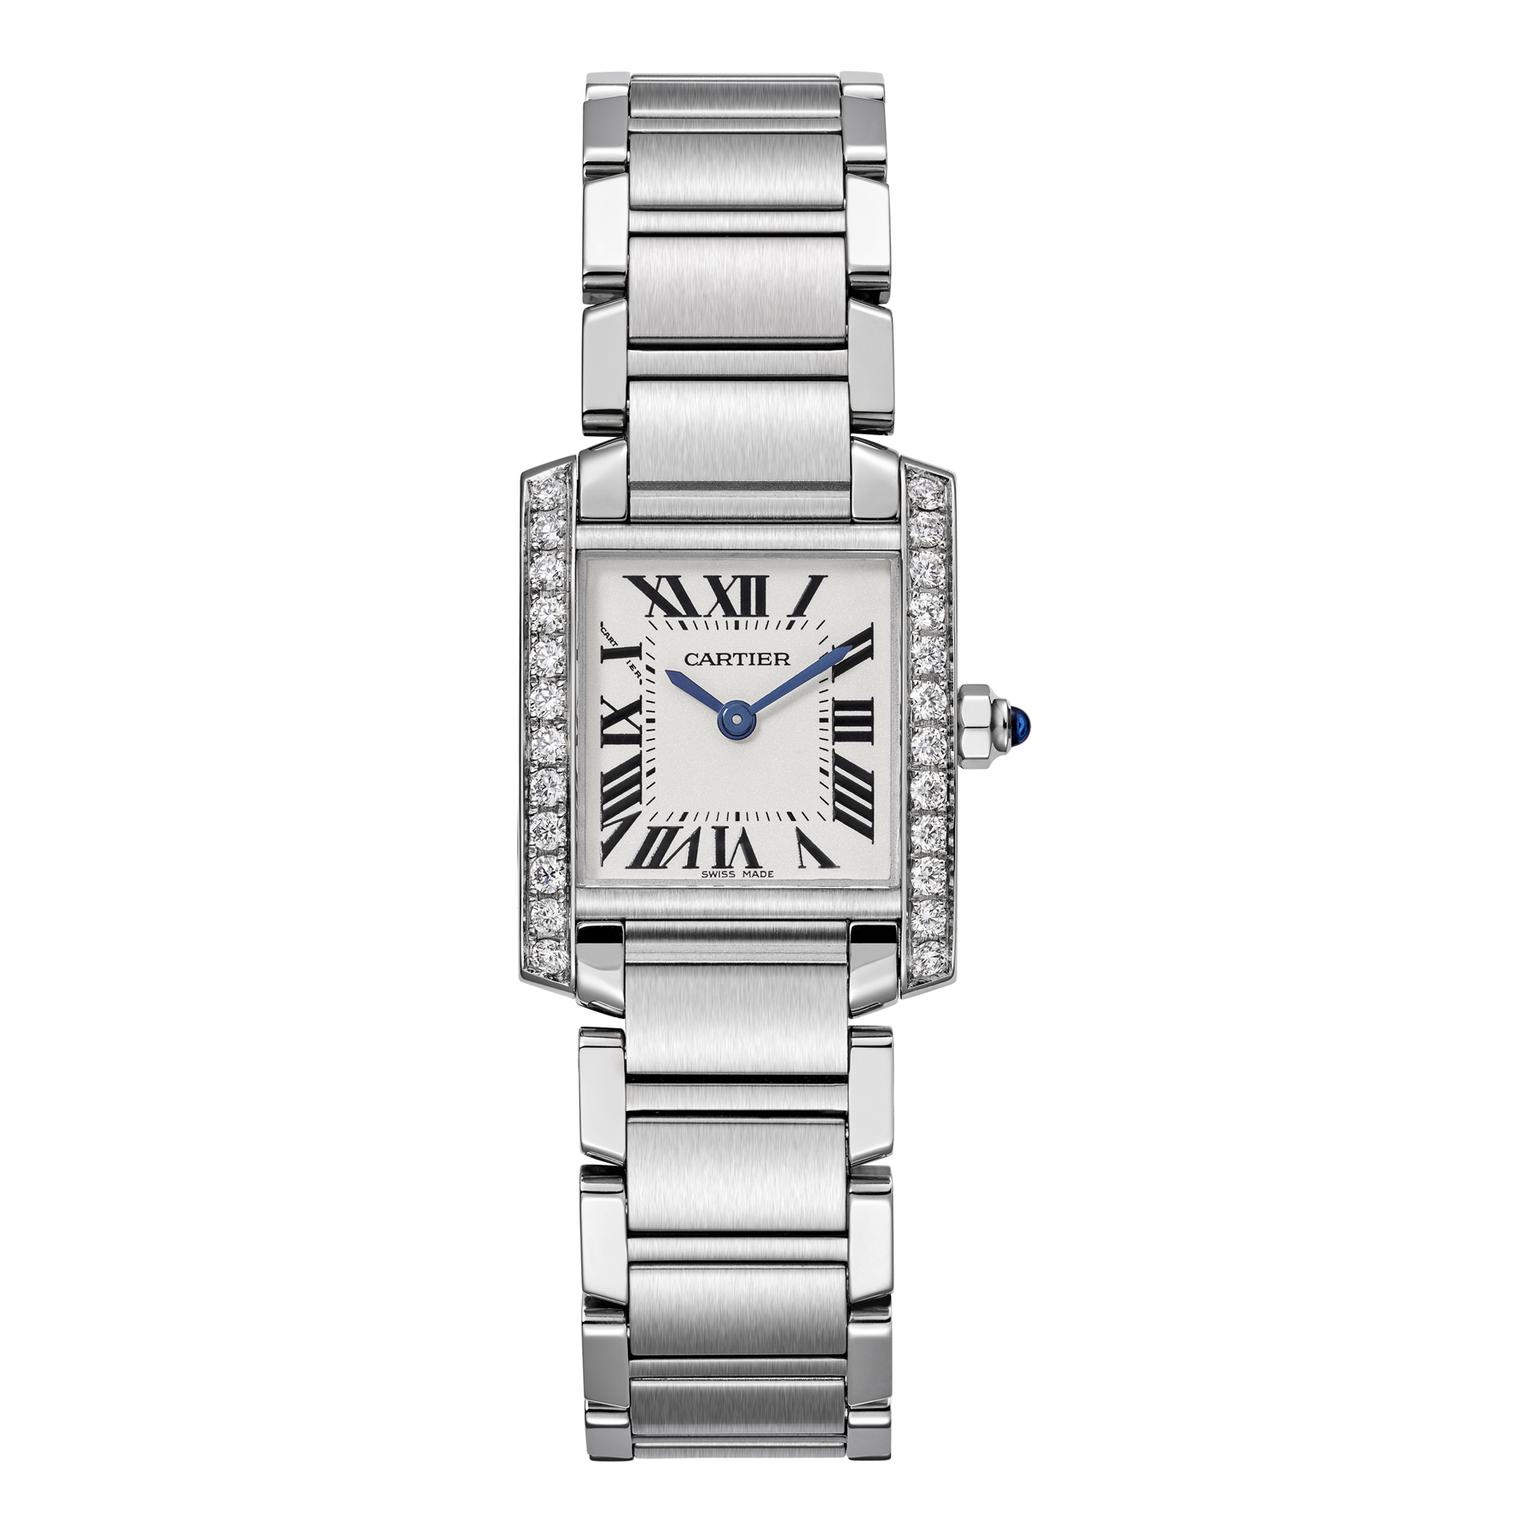 Cartier Tank Française small steel watch with diamonds